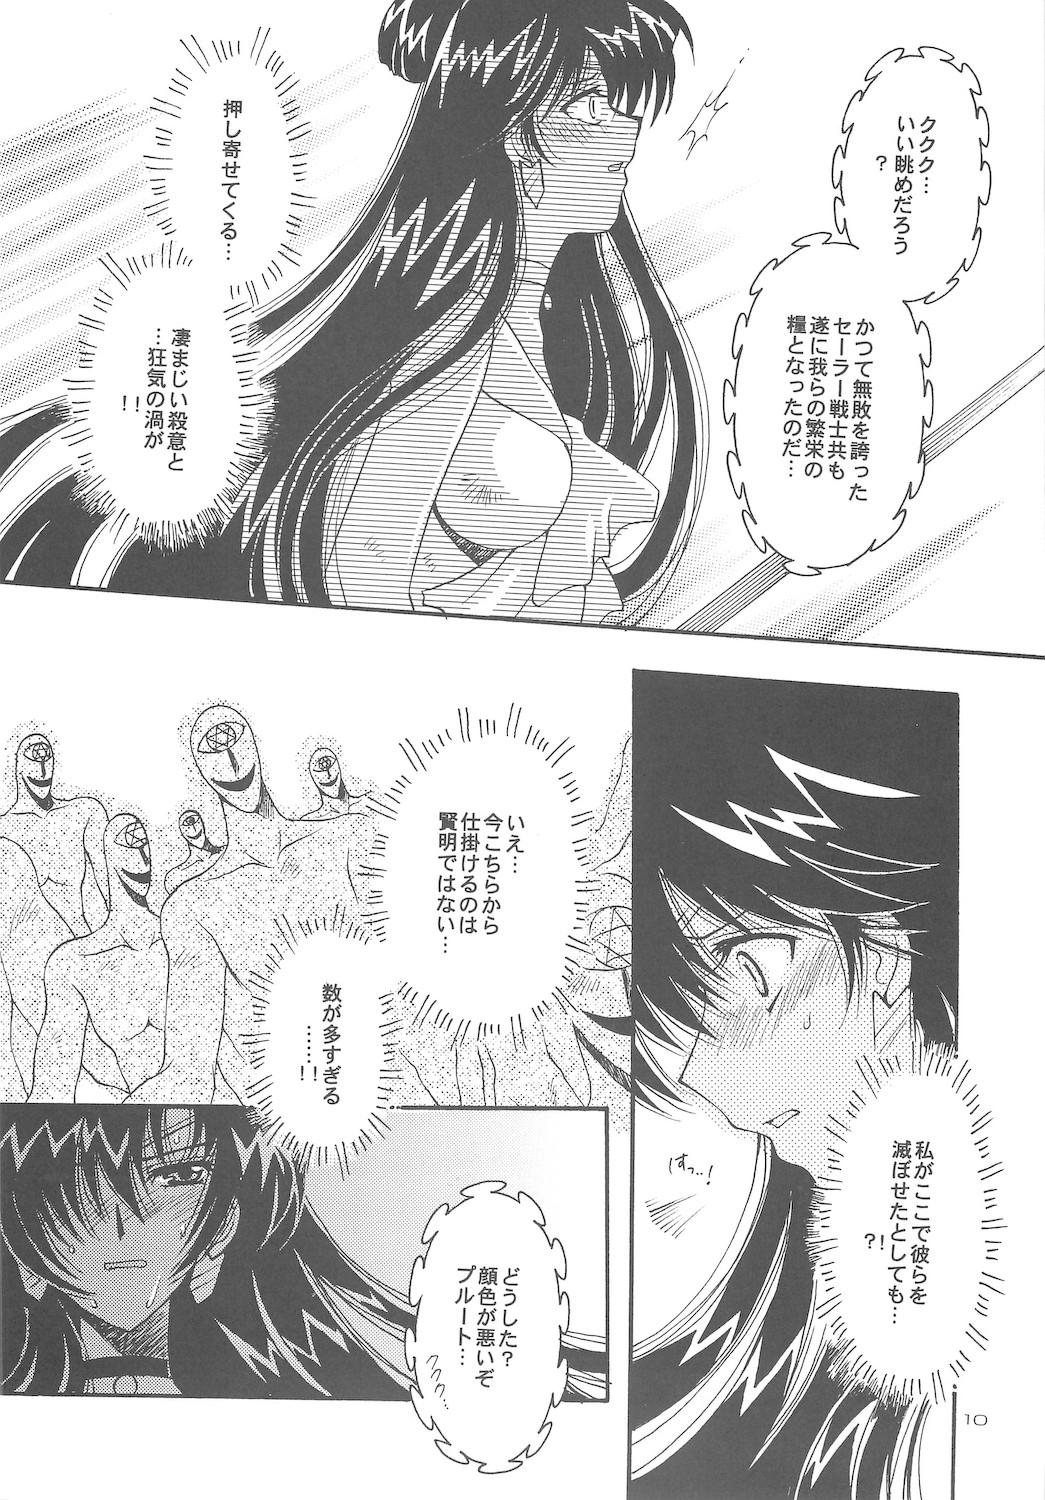 Monster Owaru Sekai dai 4 shou - Sailor moon Interview - Page 10